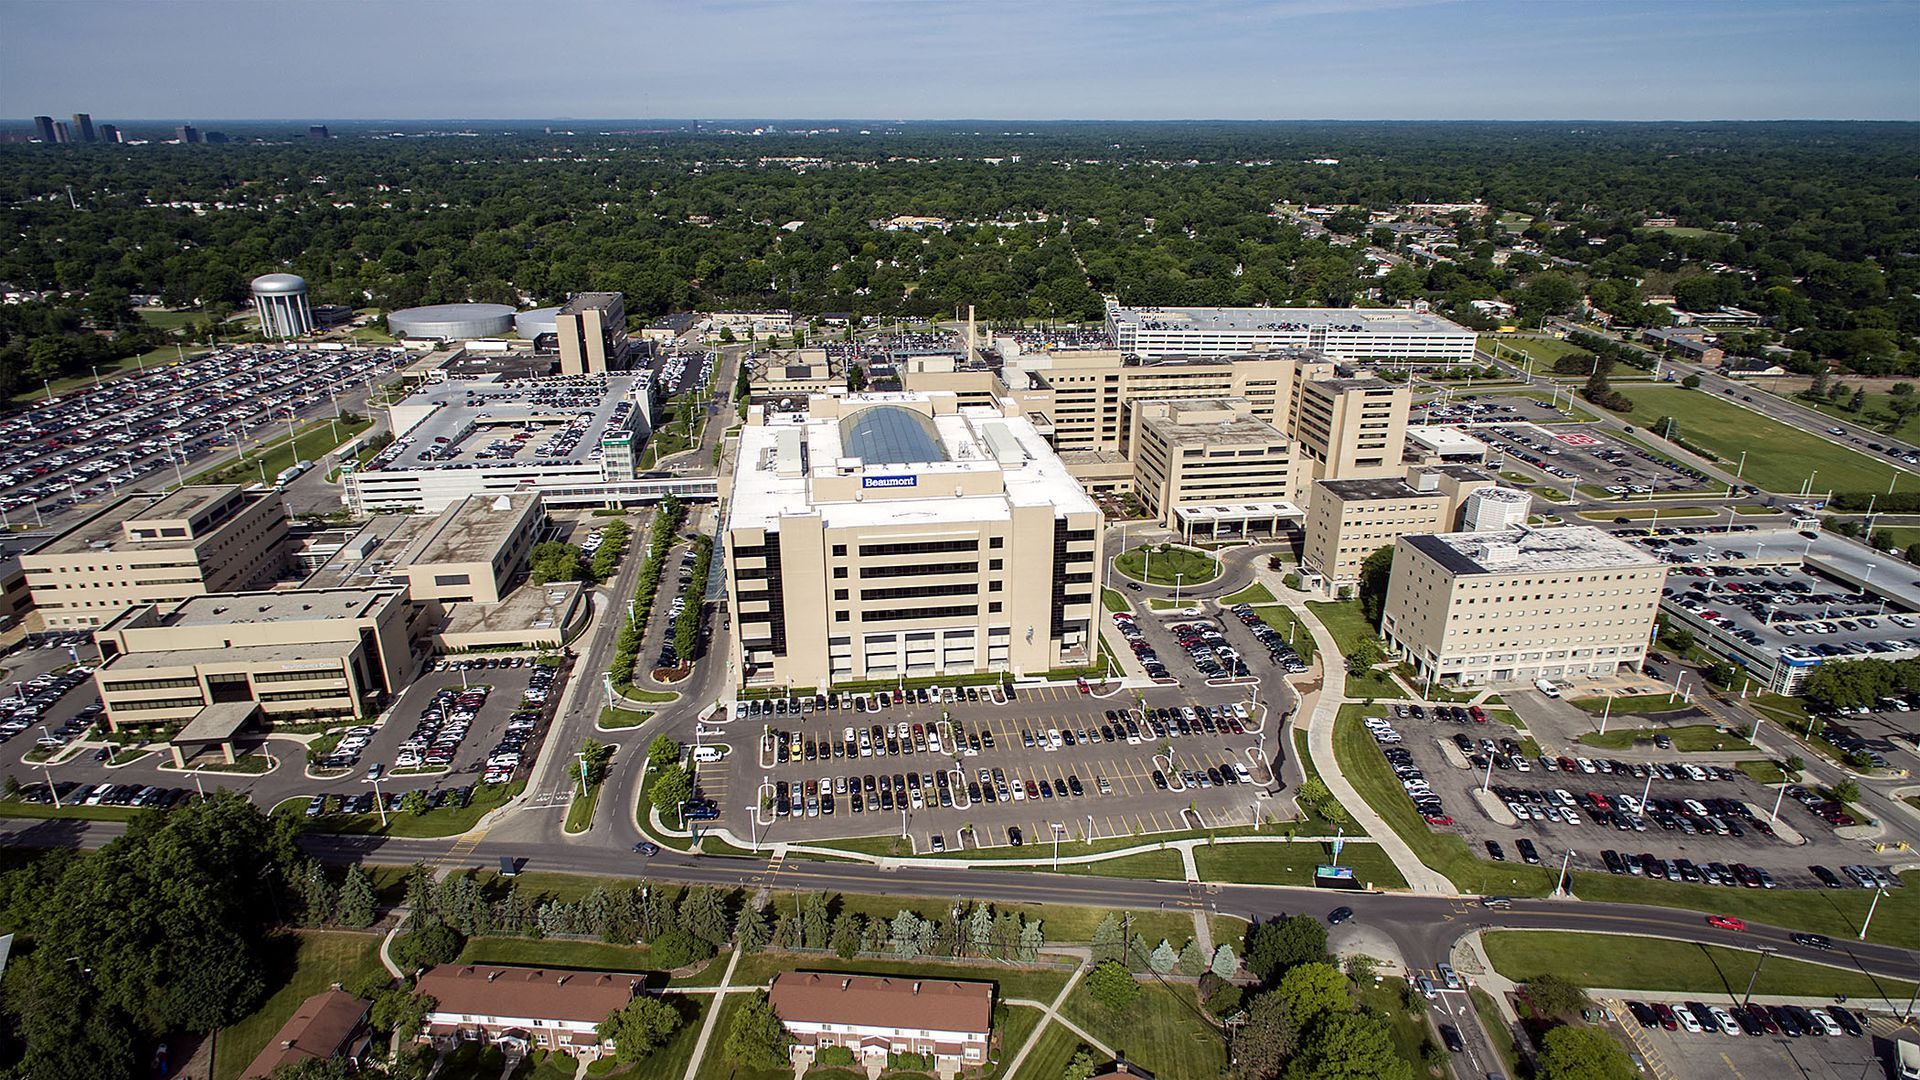 Beaumont Health's main hospital campus in Royal Oak, Michigan.